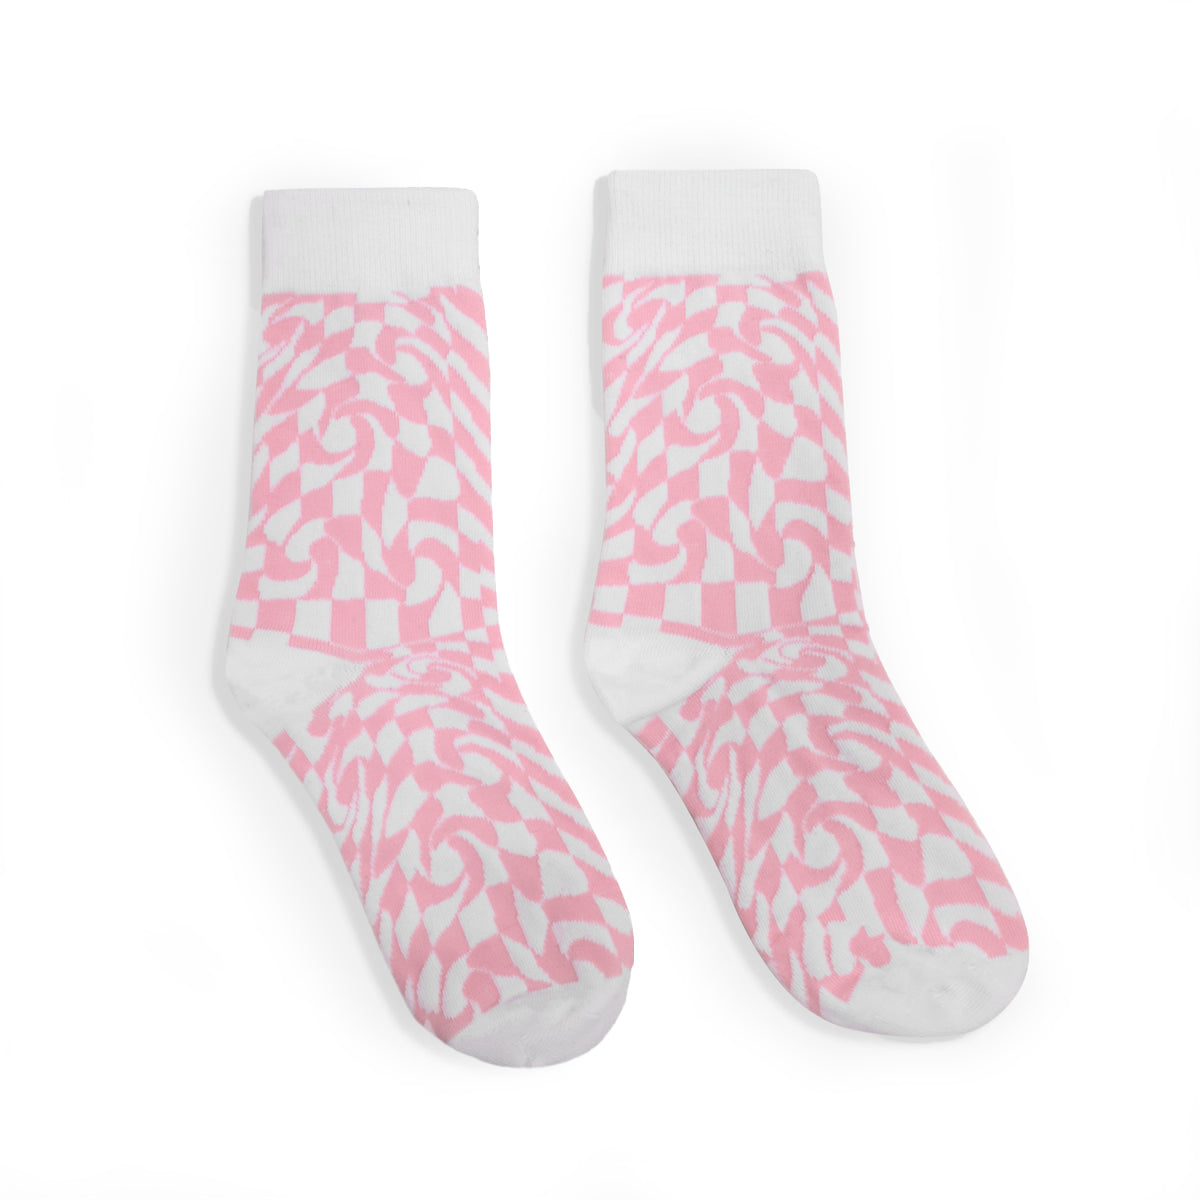 Check Mate Multi Pack Socks- Pink & Blue